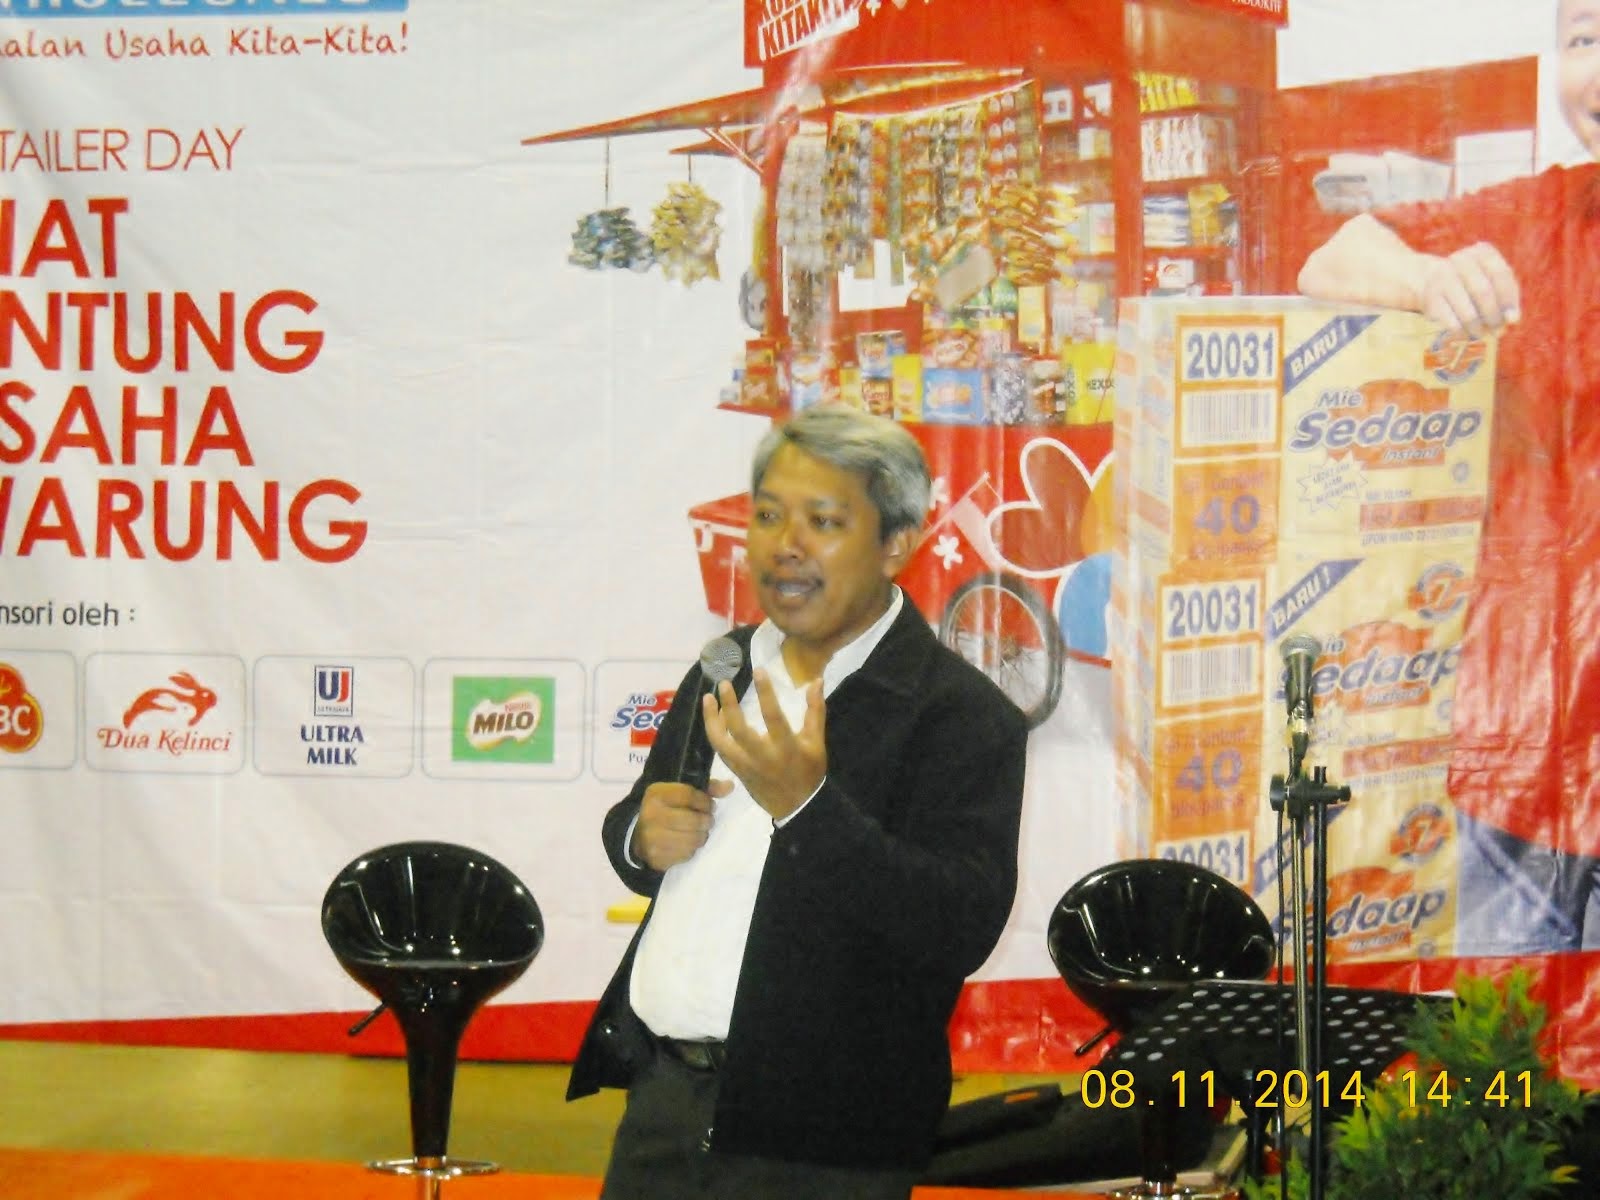 Memotivasi Retailer Seluruh Kota Bekasi @ LotteMart Bekasi